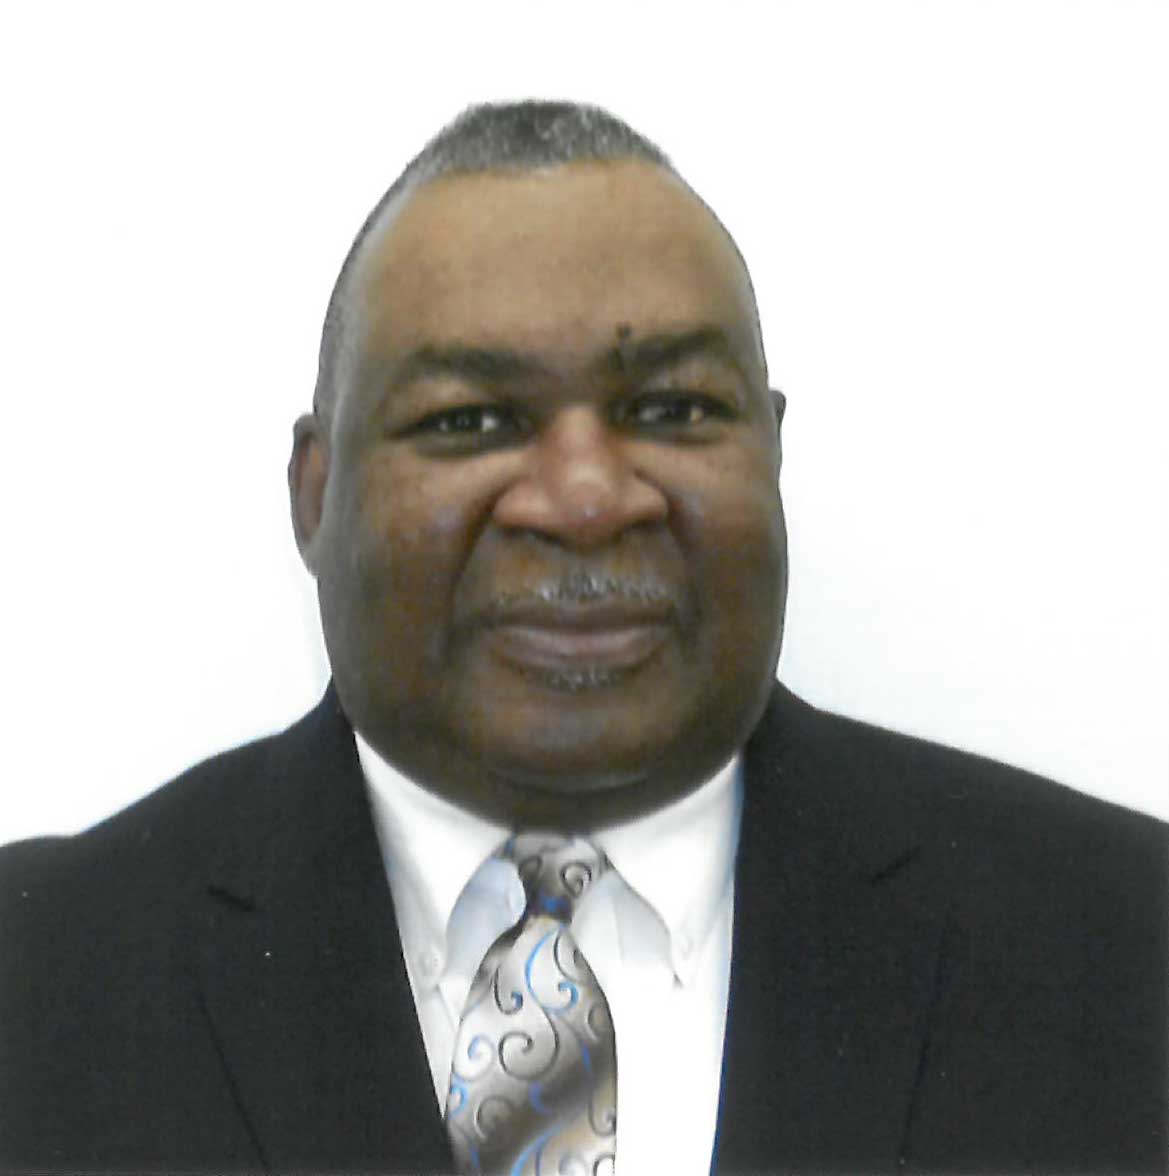 Bertie County Commissioner Ronald Roberson